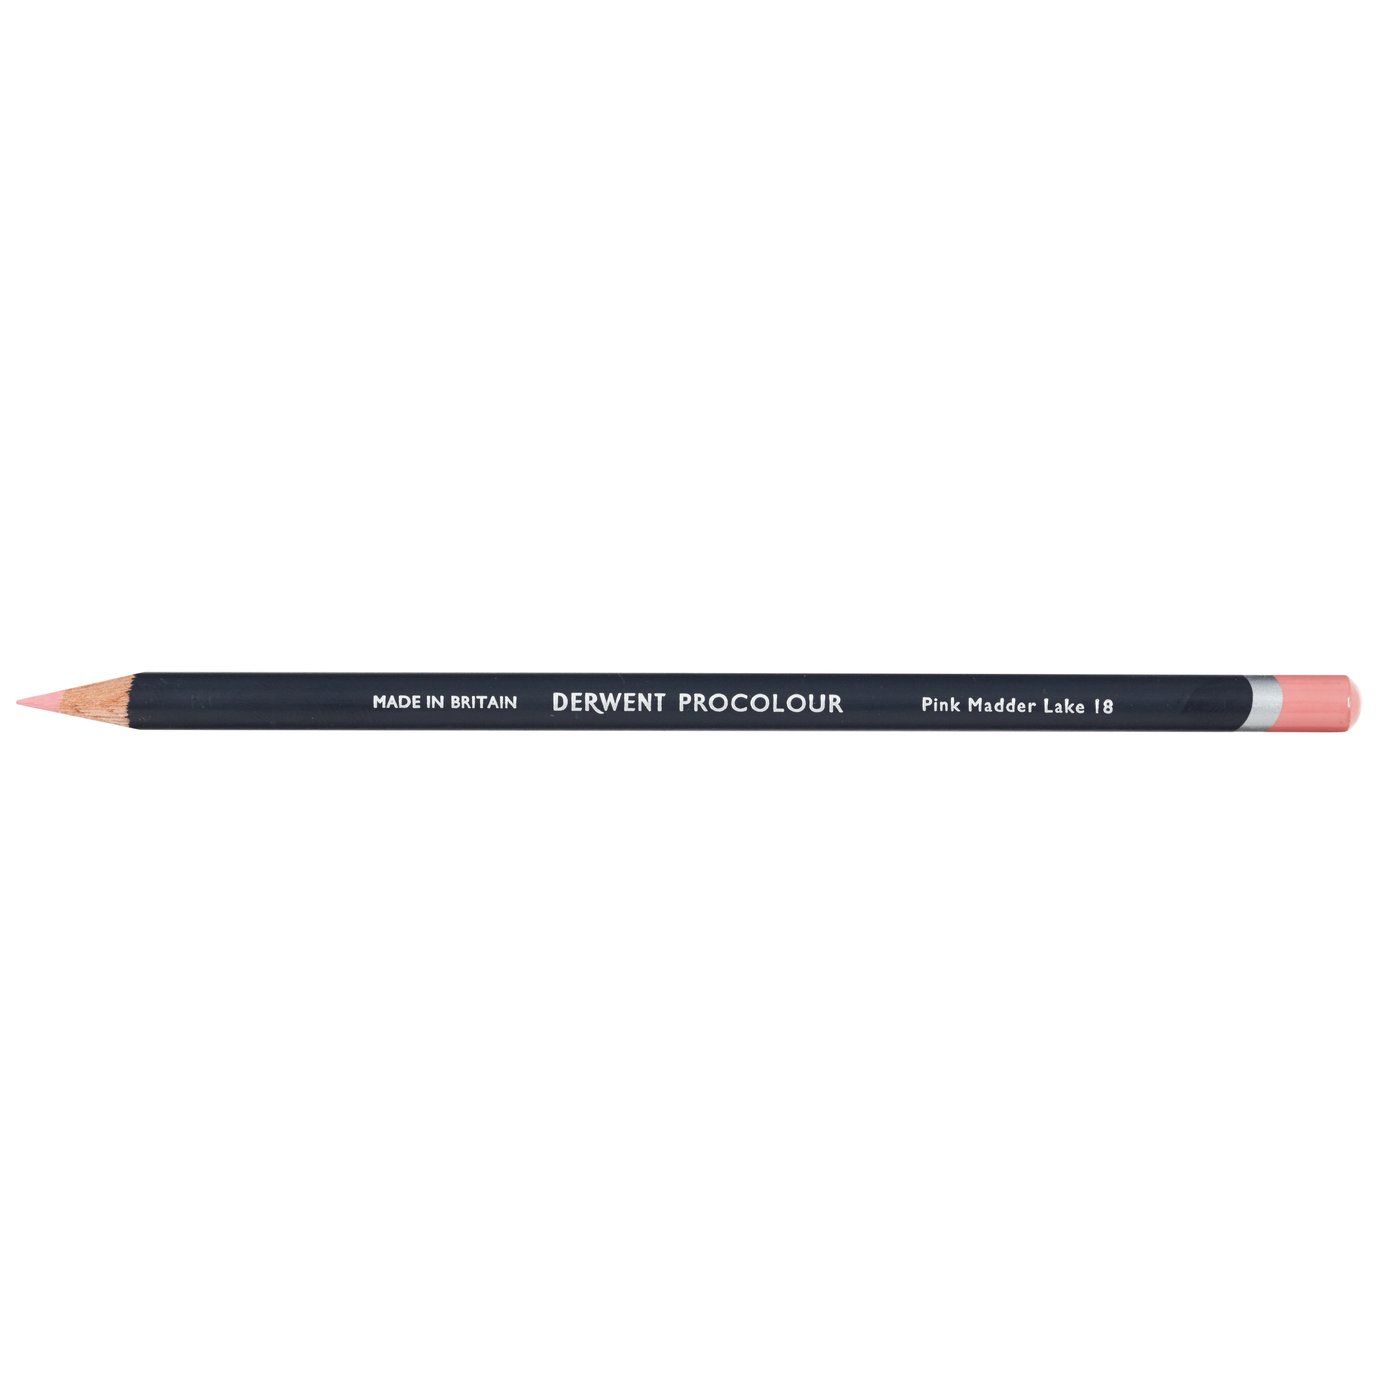 Derwent Procolour Pencil - 18 Pink Madder Lake